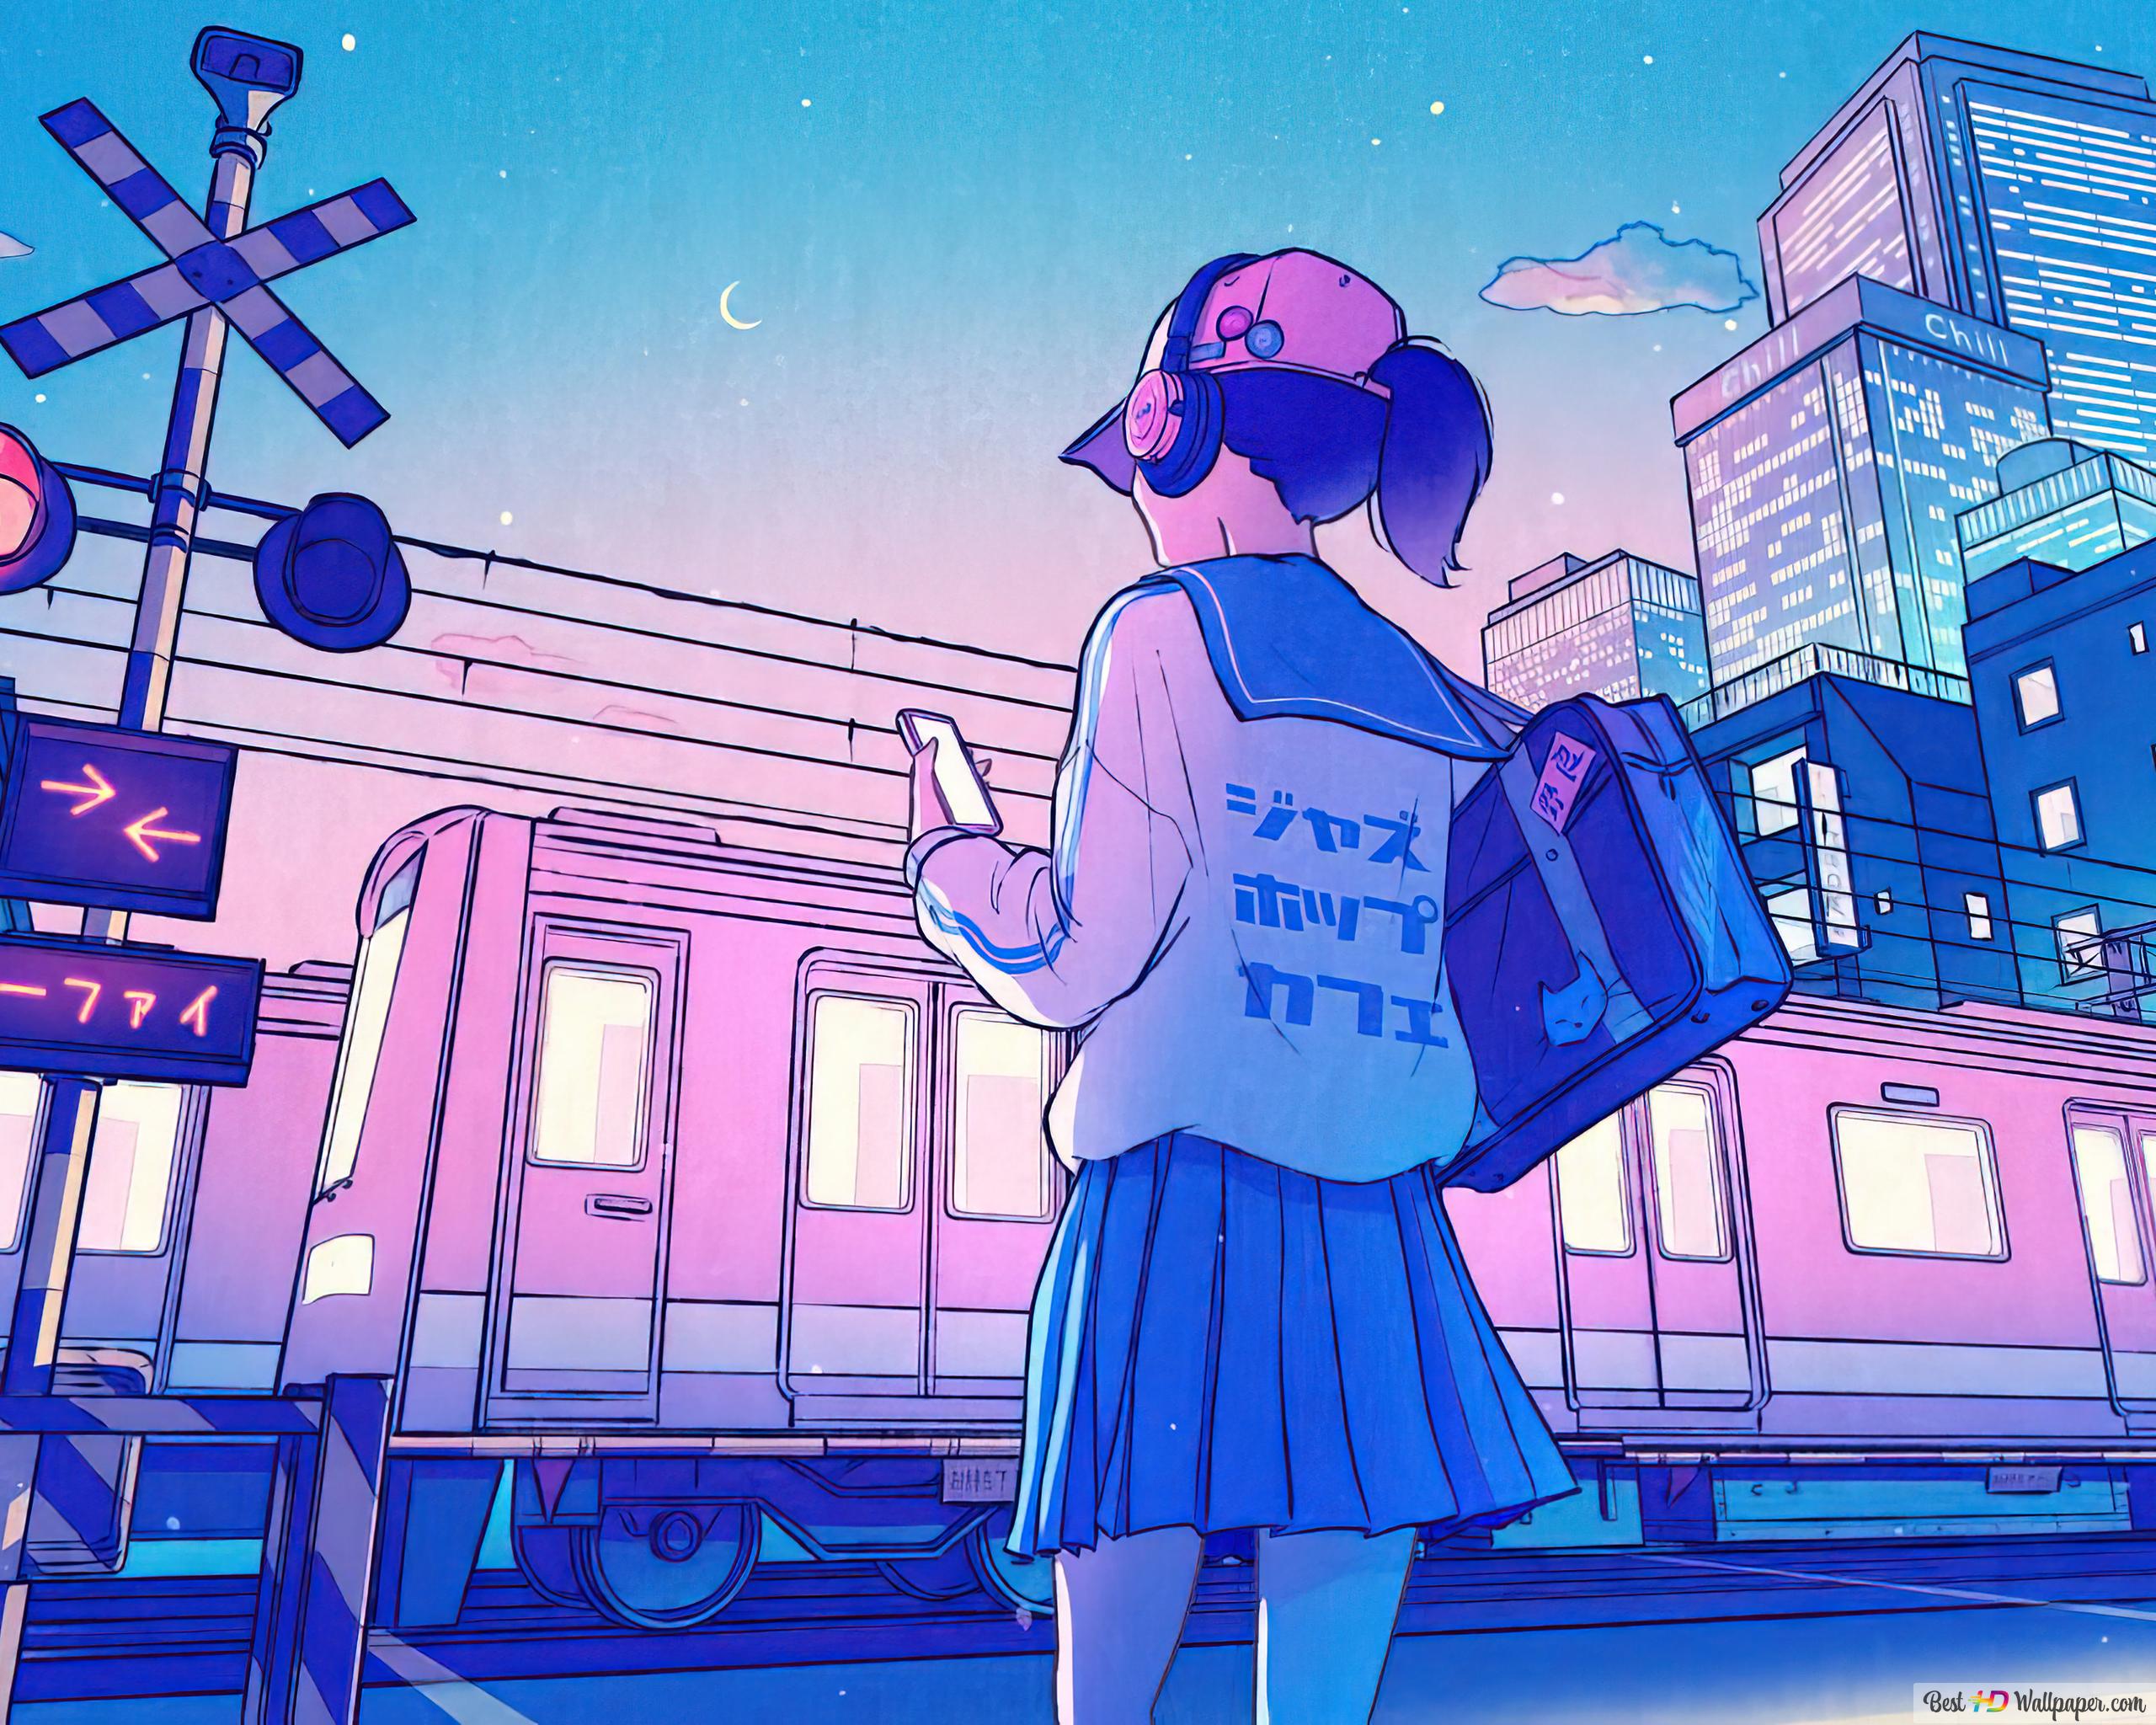 Anime Girl Art Train Night City 4K wallpaper download